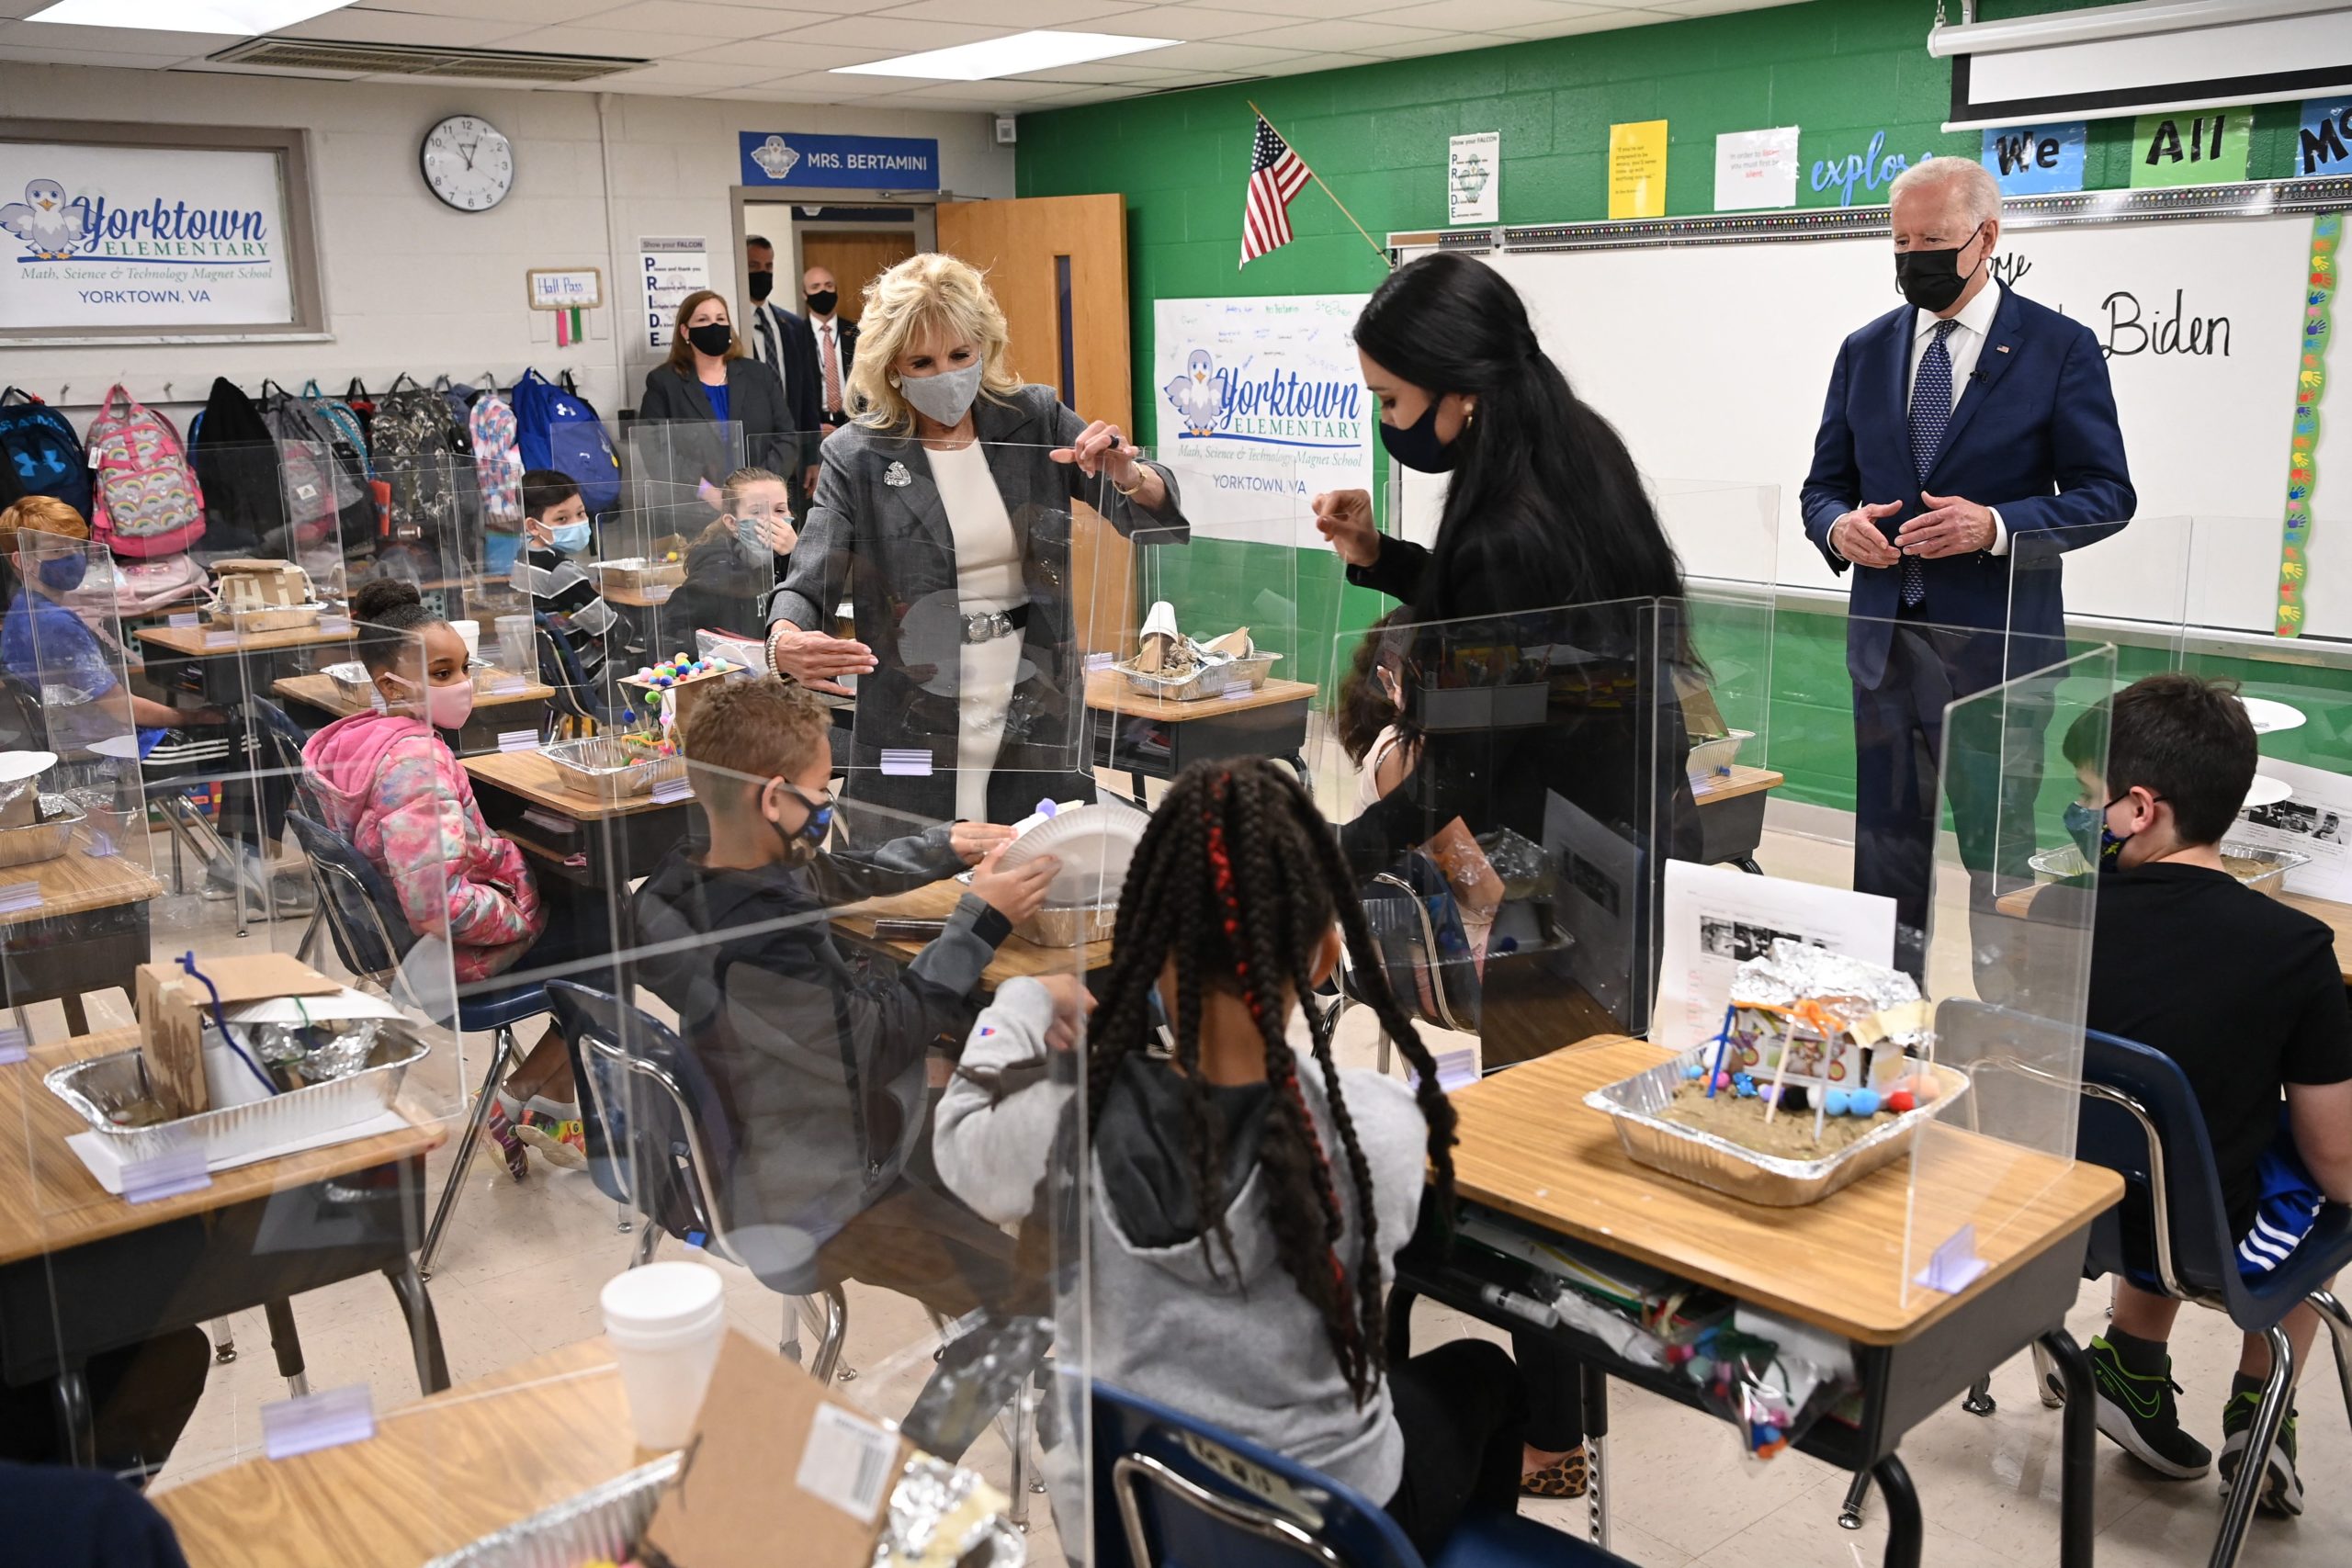 US President Joe Biden(R) and First Lady Jill Biden(L) visit the classroom of fifth-grade teacher Cindy Bertamini, at Yorktown Elementary School in Yorktown, Virginia on May 3, 2021. (Photo by MANDEL NGAN / AFP) (Photo by MANDEL NGAN/AFP via Getty Images)